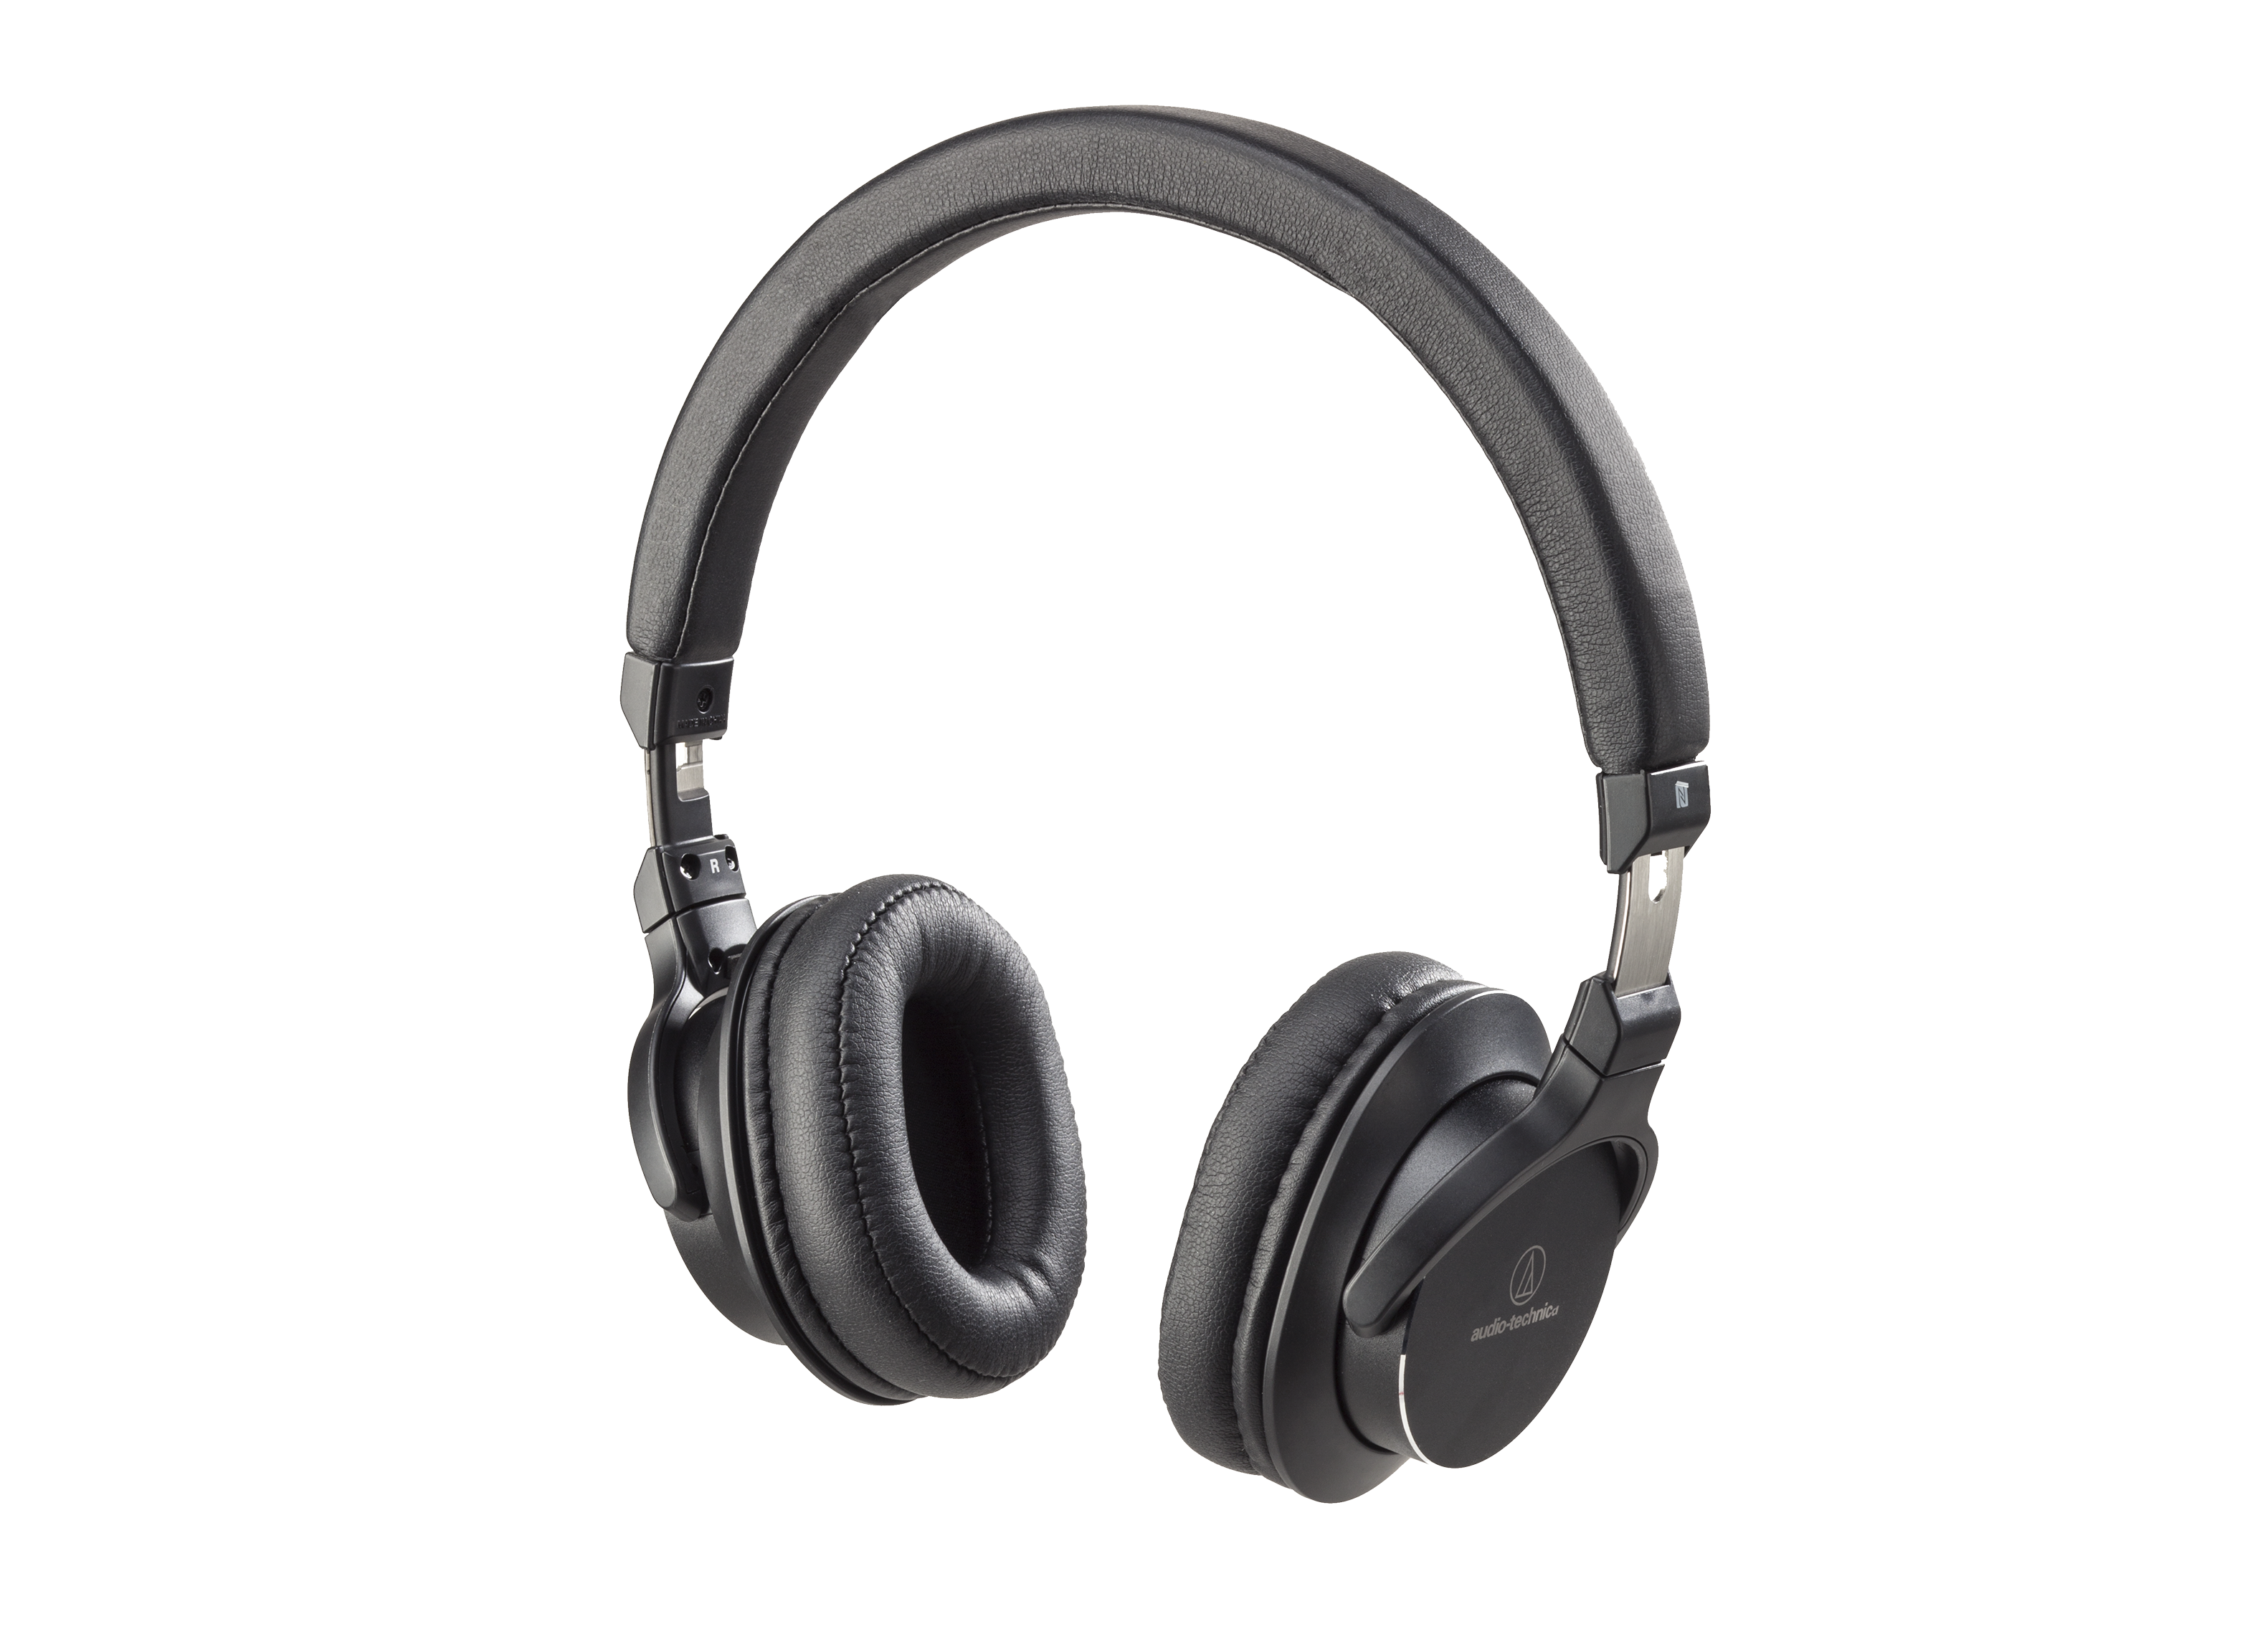 Audio-Technica ATH-SR5BT Headphone Review - Consumer Reports